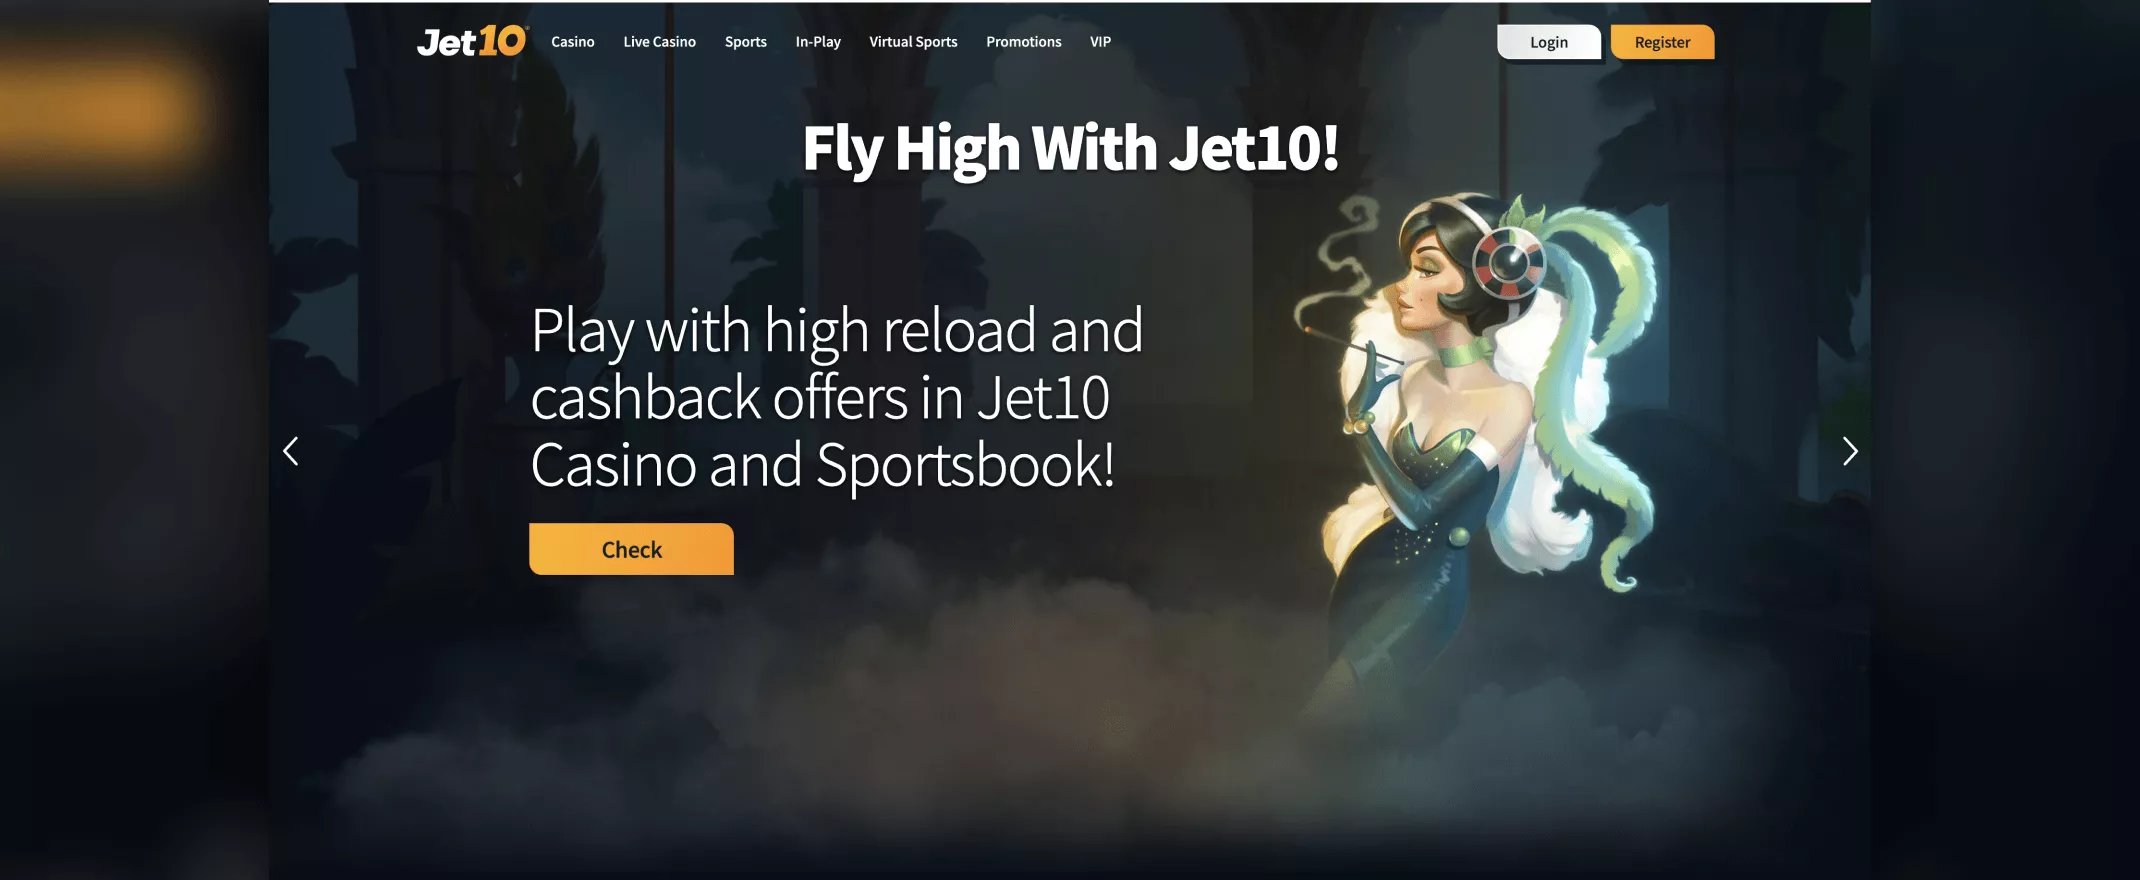 jet10 homepage